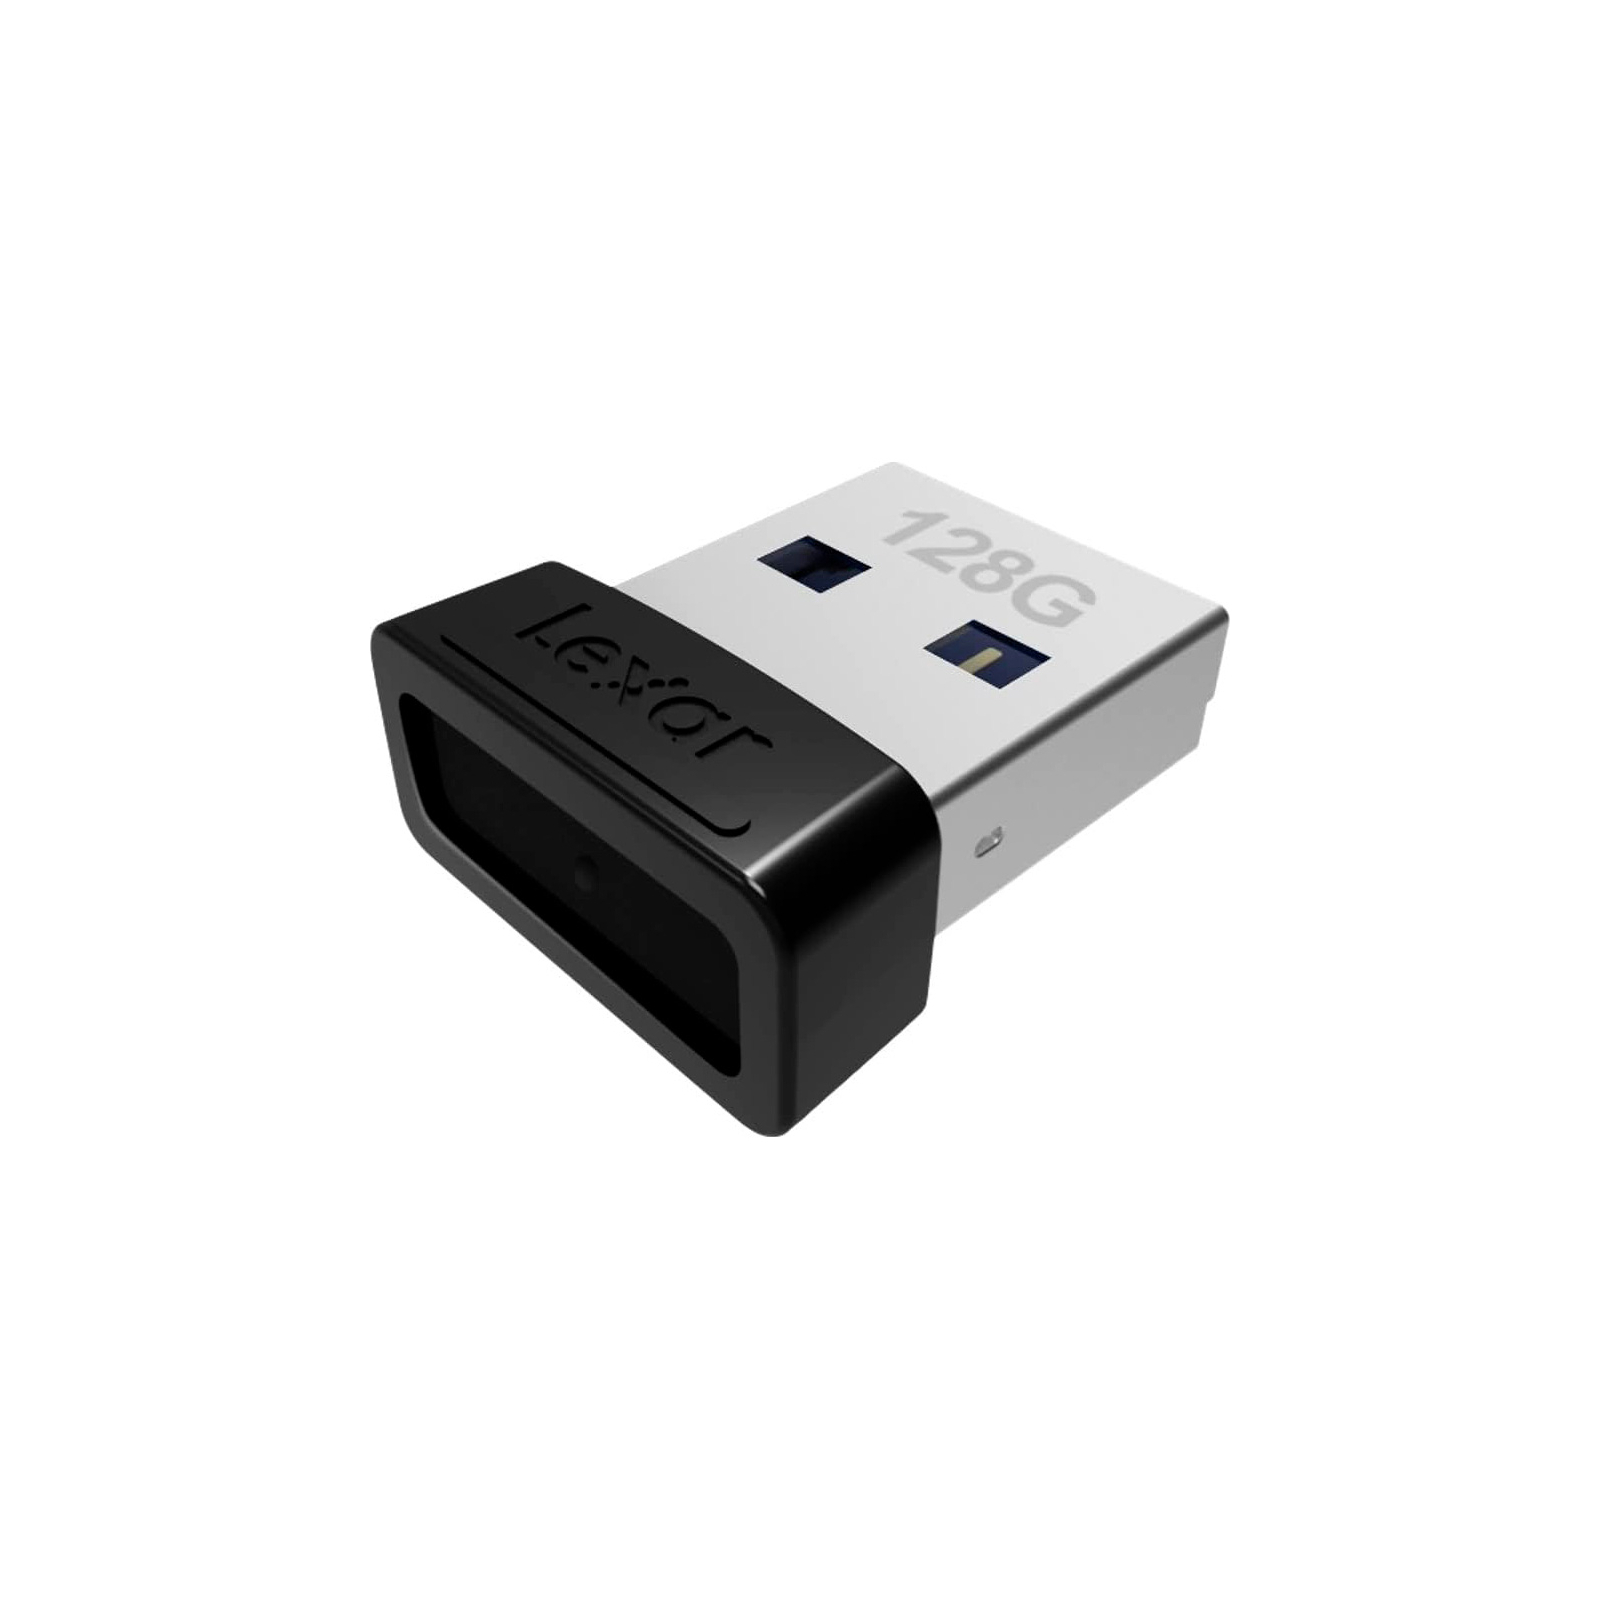 USB флеш накопитель Lexar 128GB S47 USB 2.0 (LJDS47-128ABBK) изображение 2